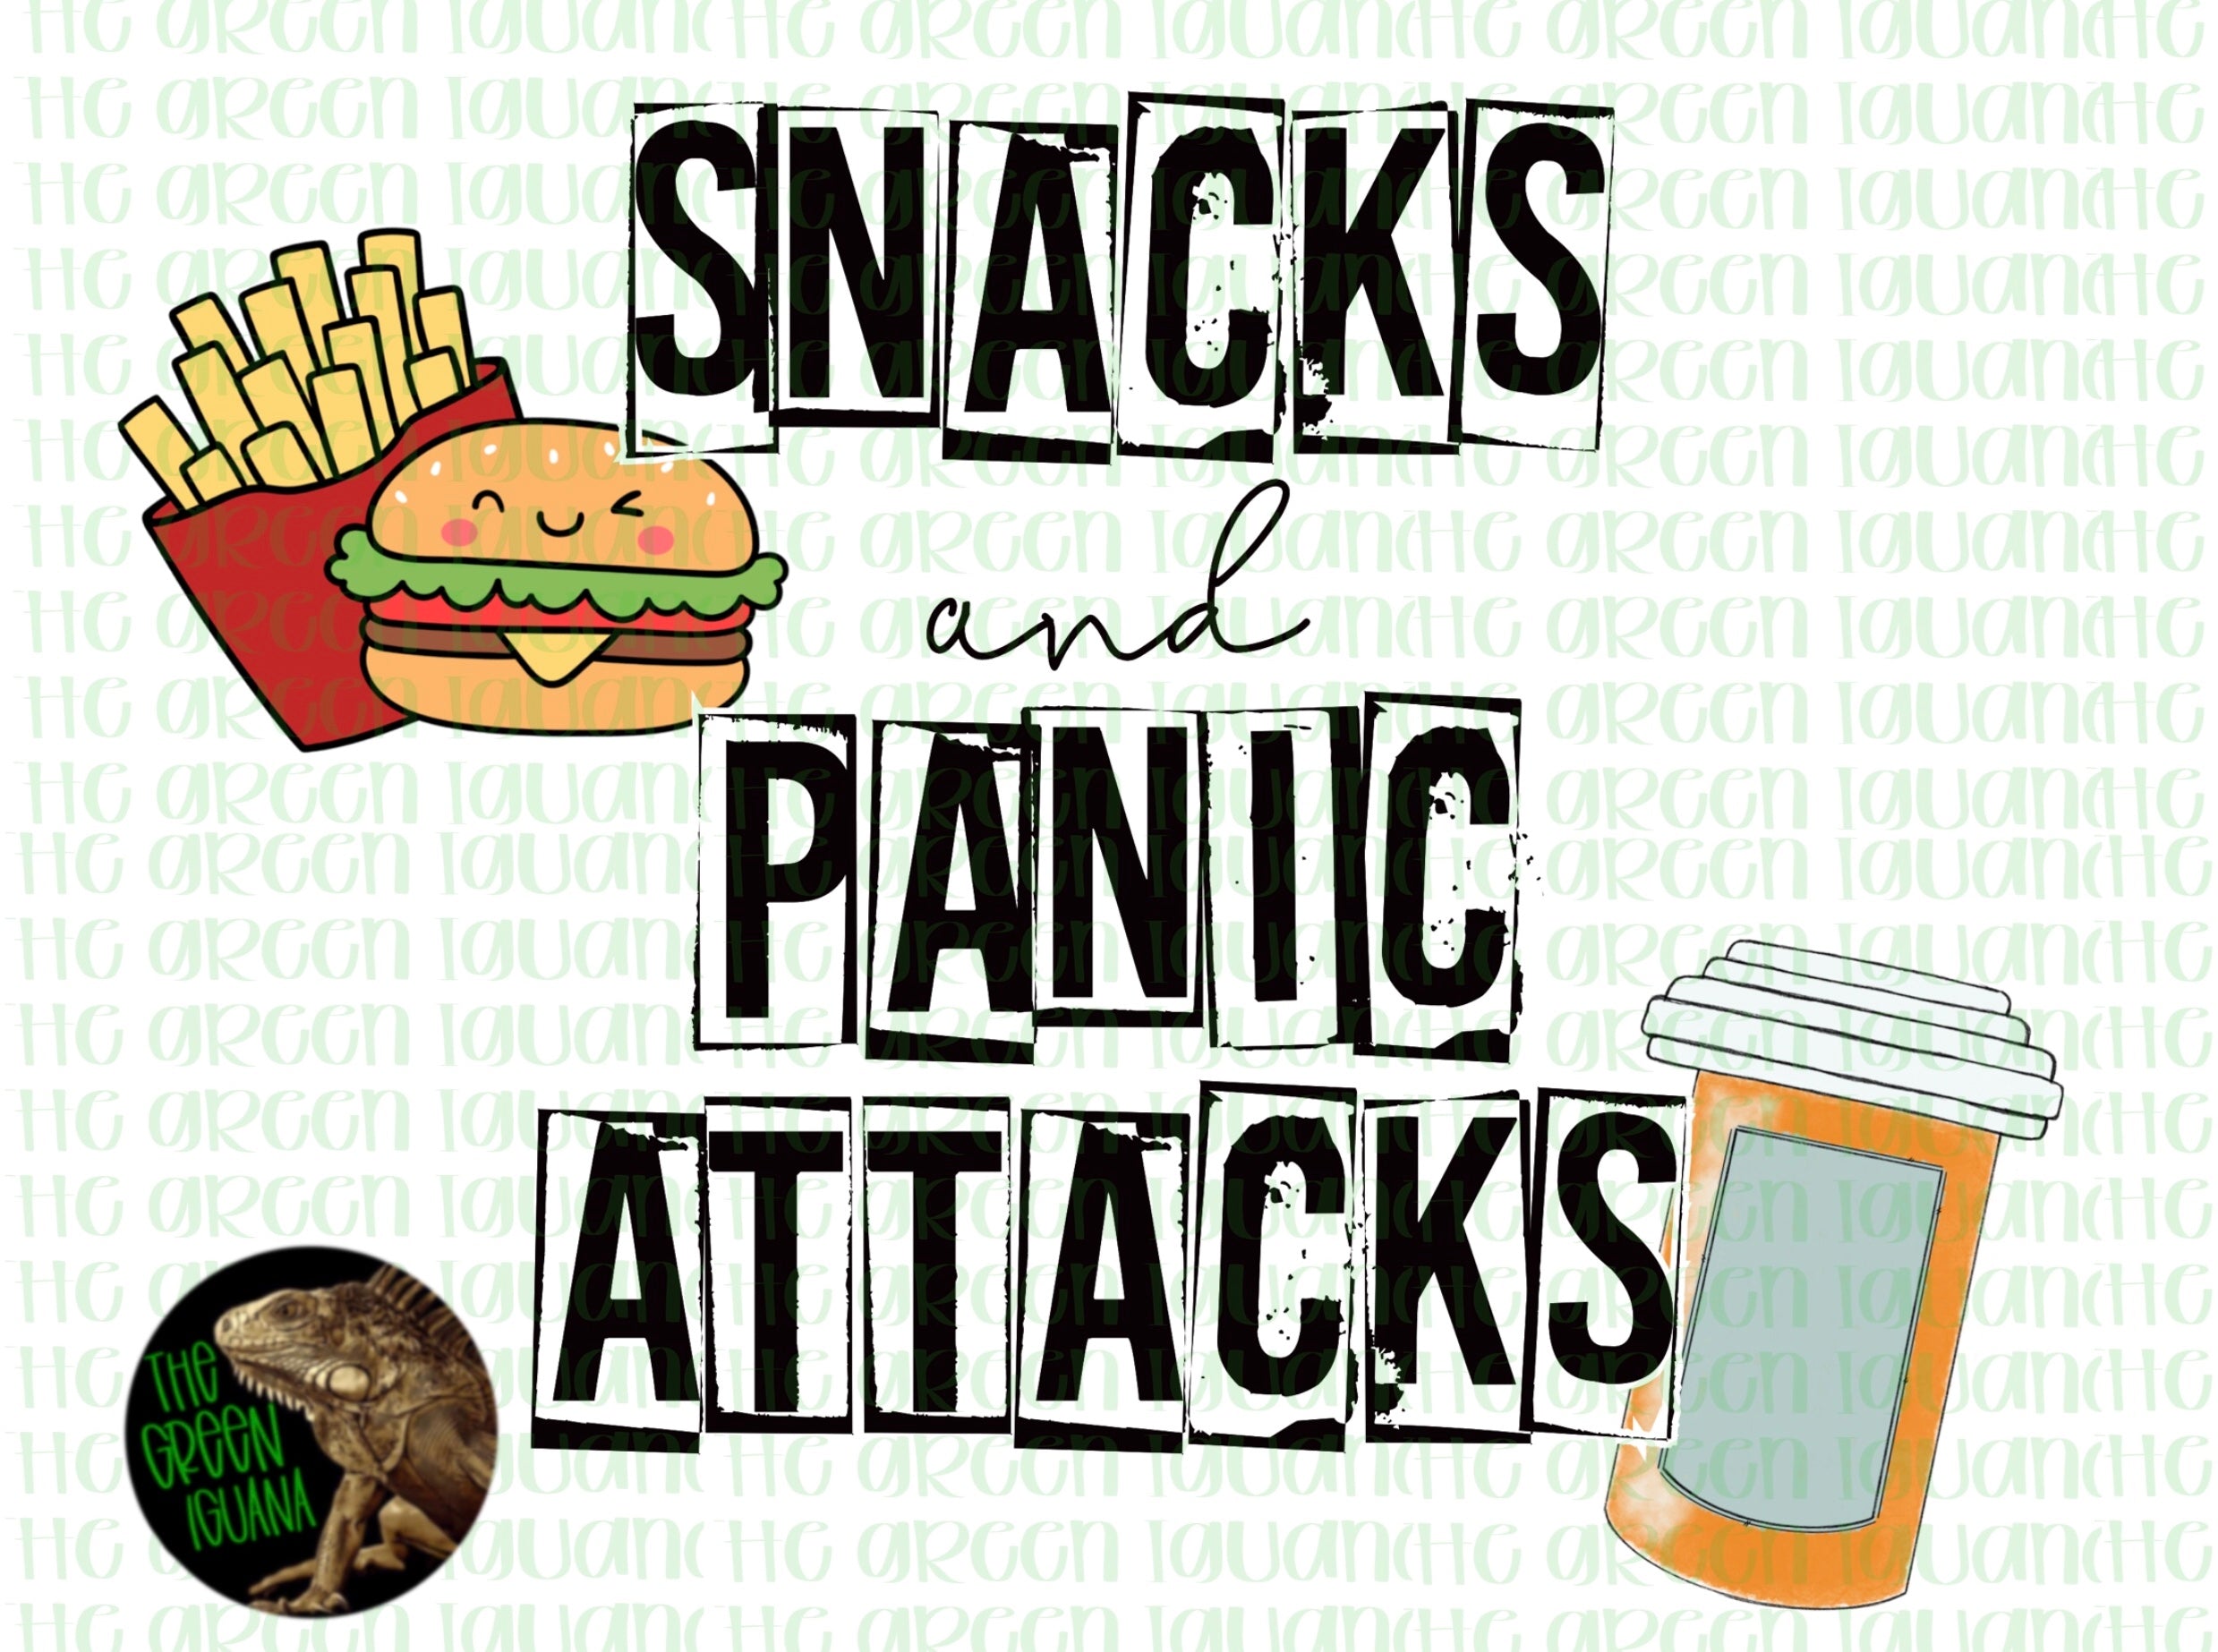 Snacks and panic attacks